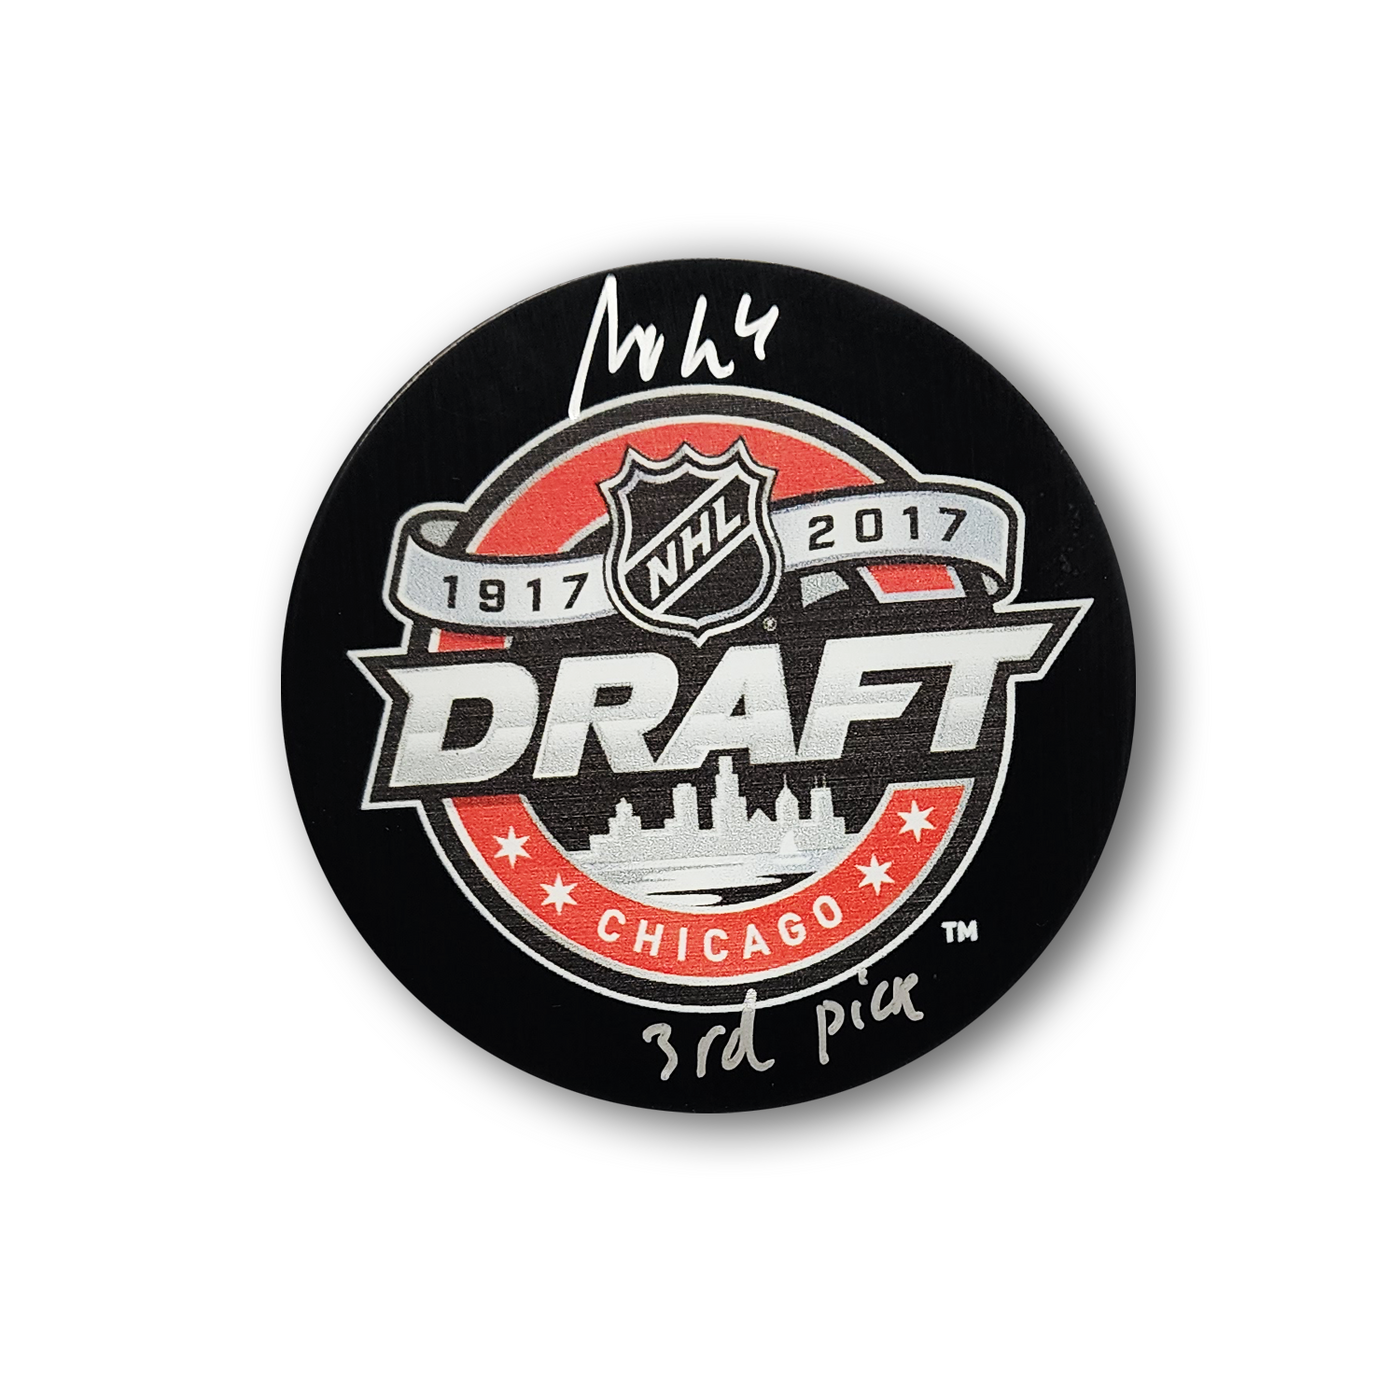 Miro Heiskanen Autographed 2017 NHL Draft Hockey Puck Inscribed 3rd Pick